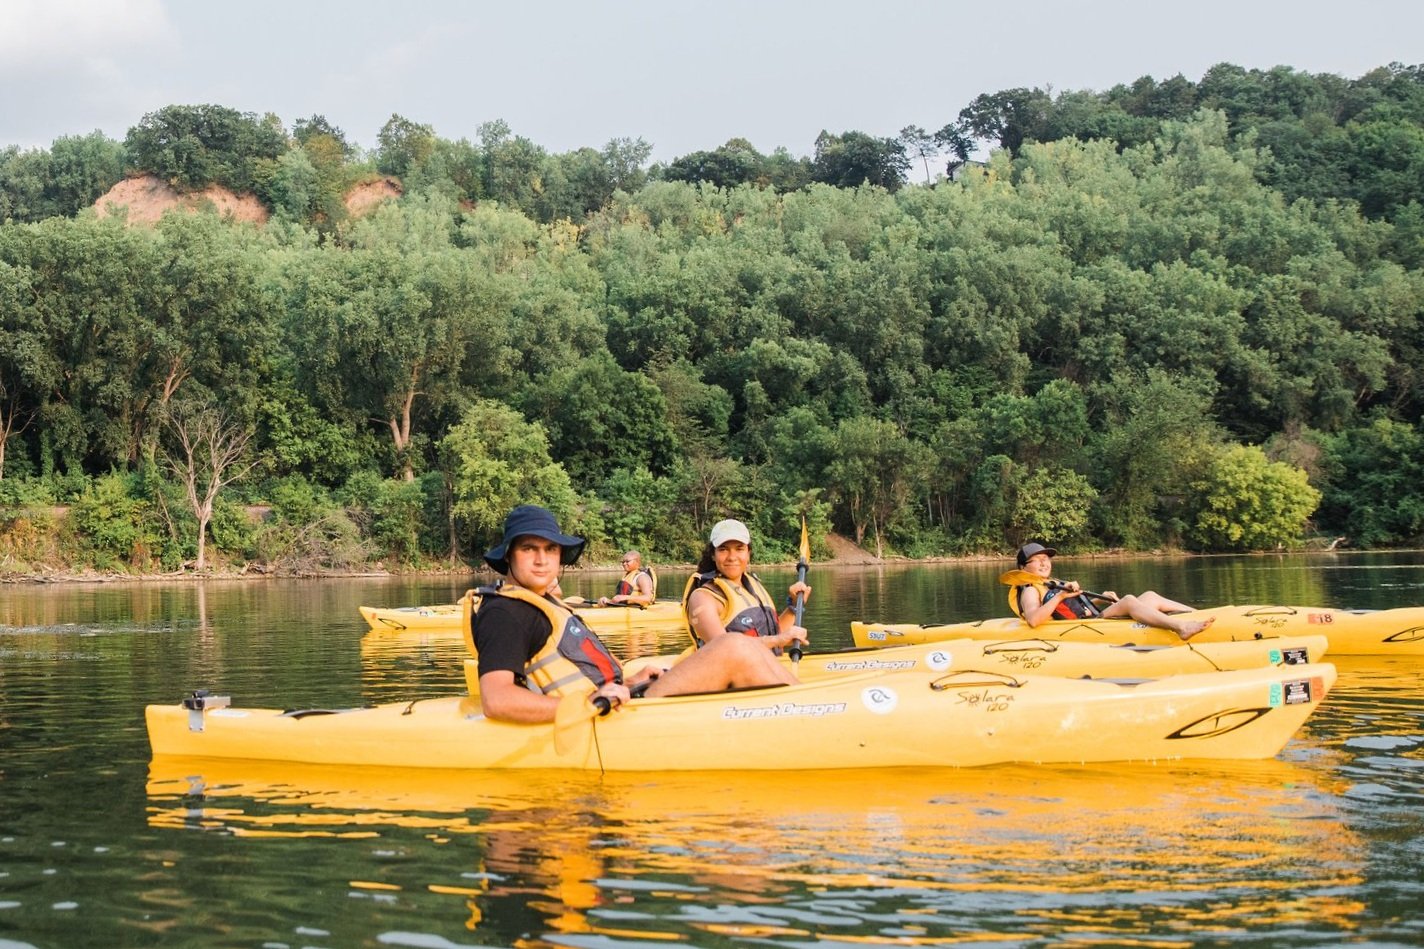  Several people paddle around a lake in yellow kayaks. 